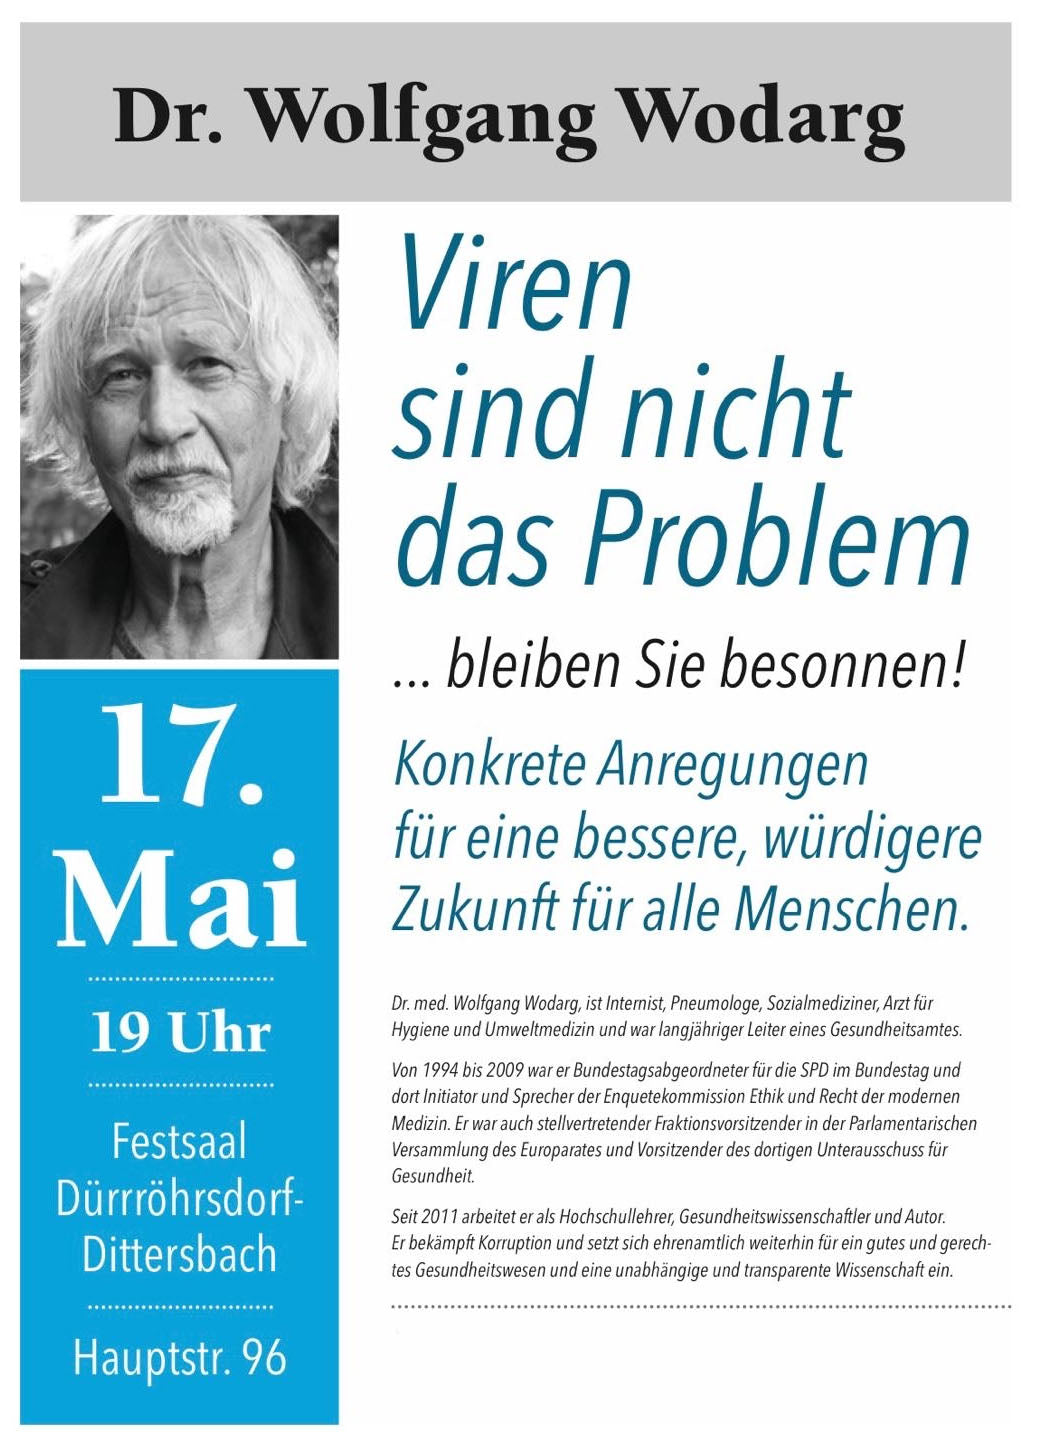 Vortrag Dr. Wolfgang Wodarg - Viren sind nicht das Problem! 17. Mai bei Pirna